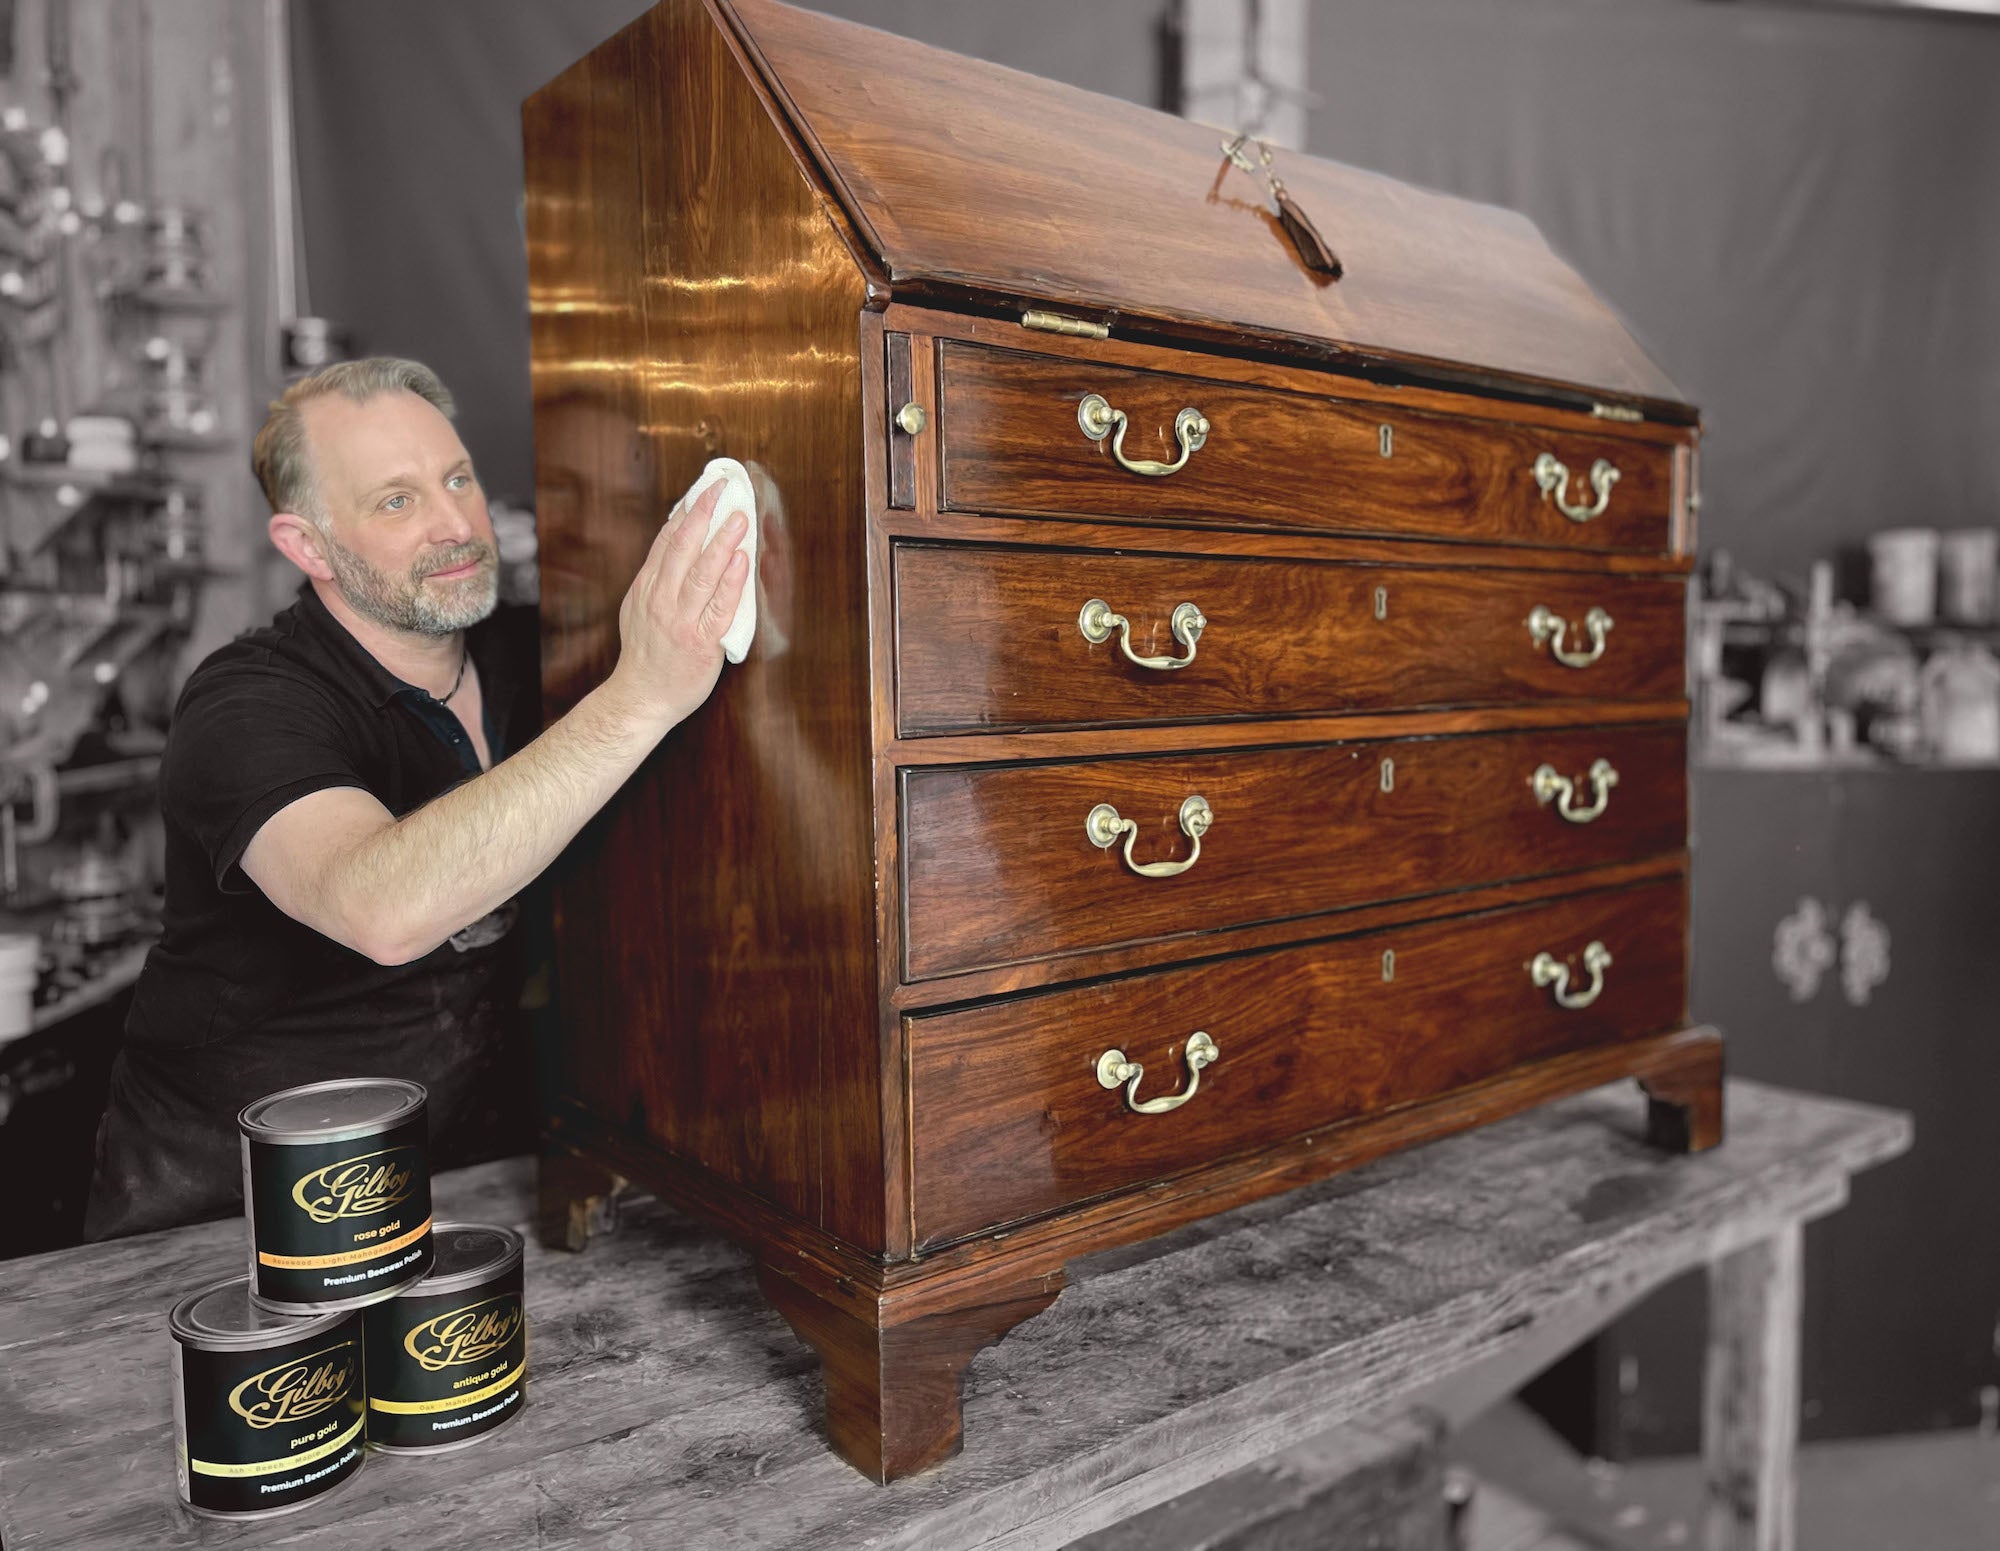 Antique Furniture Restoration Guide: Part 1 Wax On